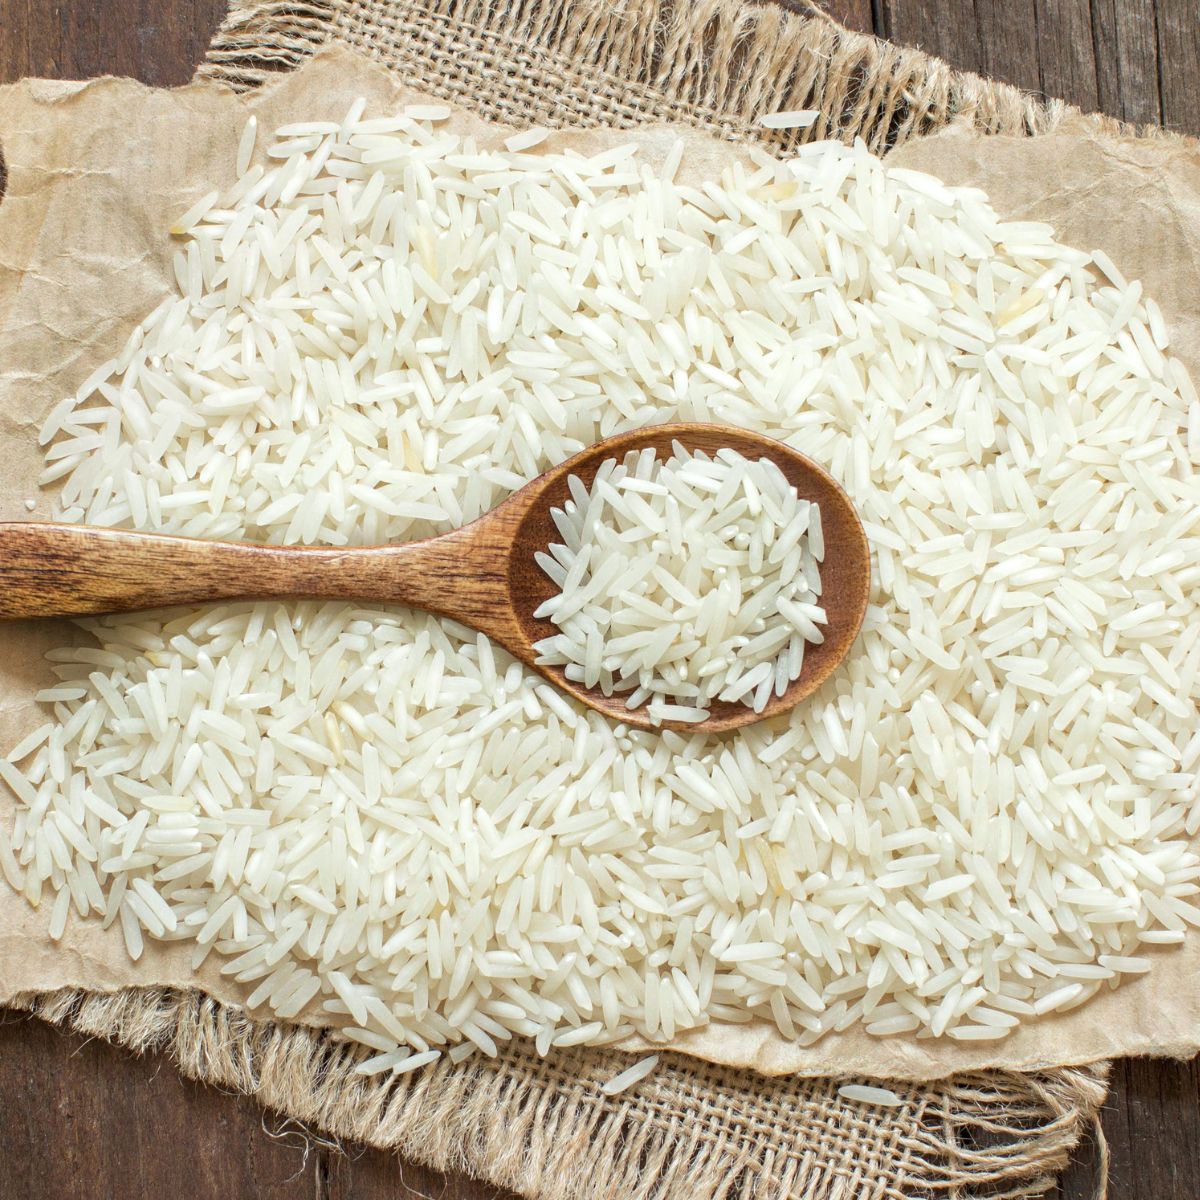 How to Make Cajun Popcorn Rice (Basmati Rice) 